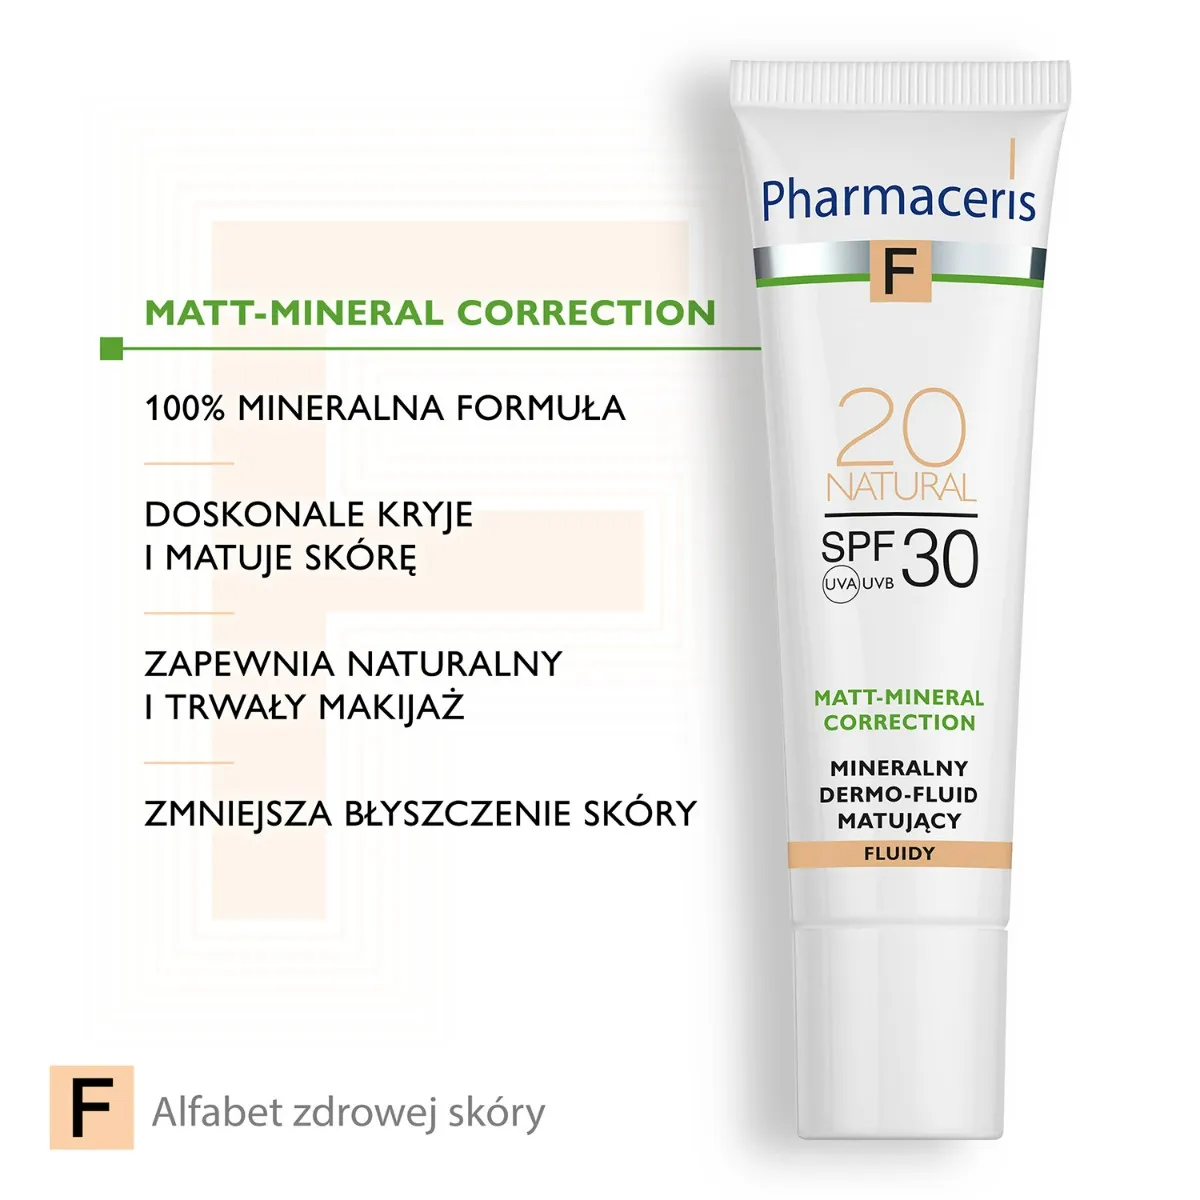 Pharmaceris F Matt-Mineral-Correction, mineralny dermo-fluid matujący, Spf 30, natural 20, 30 ml 